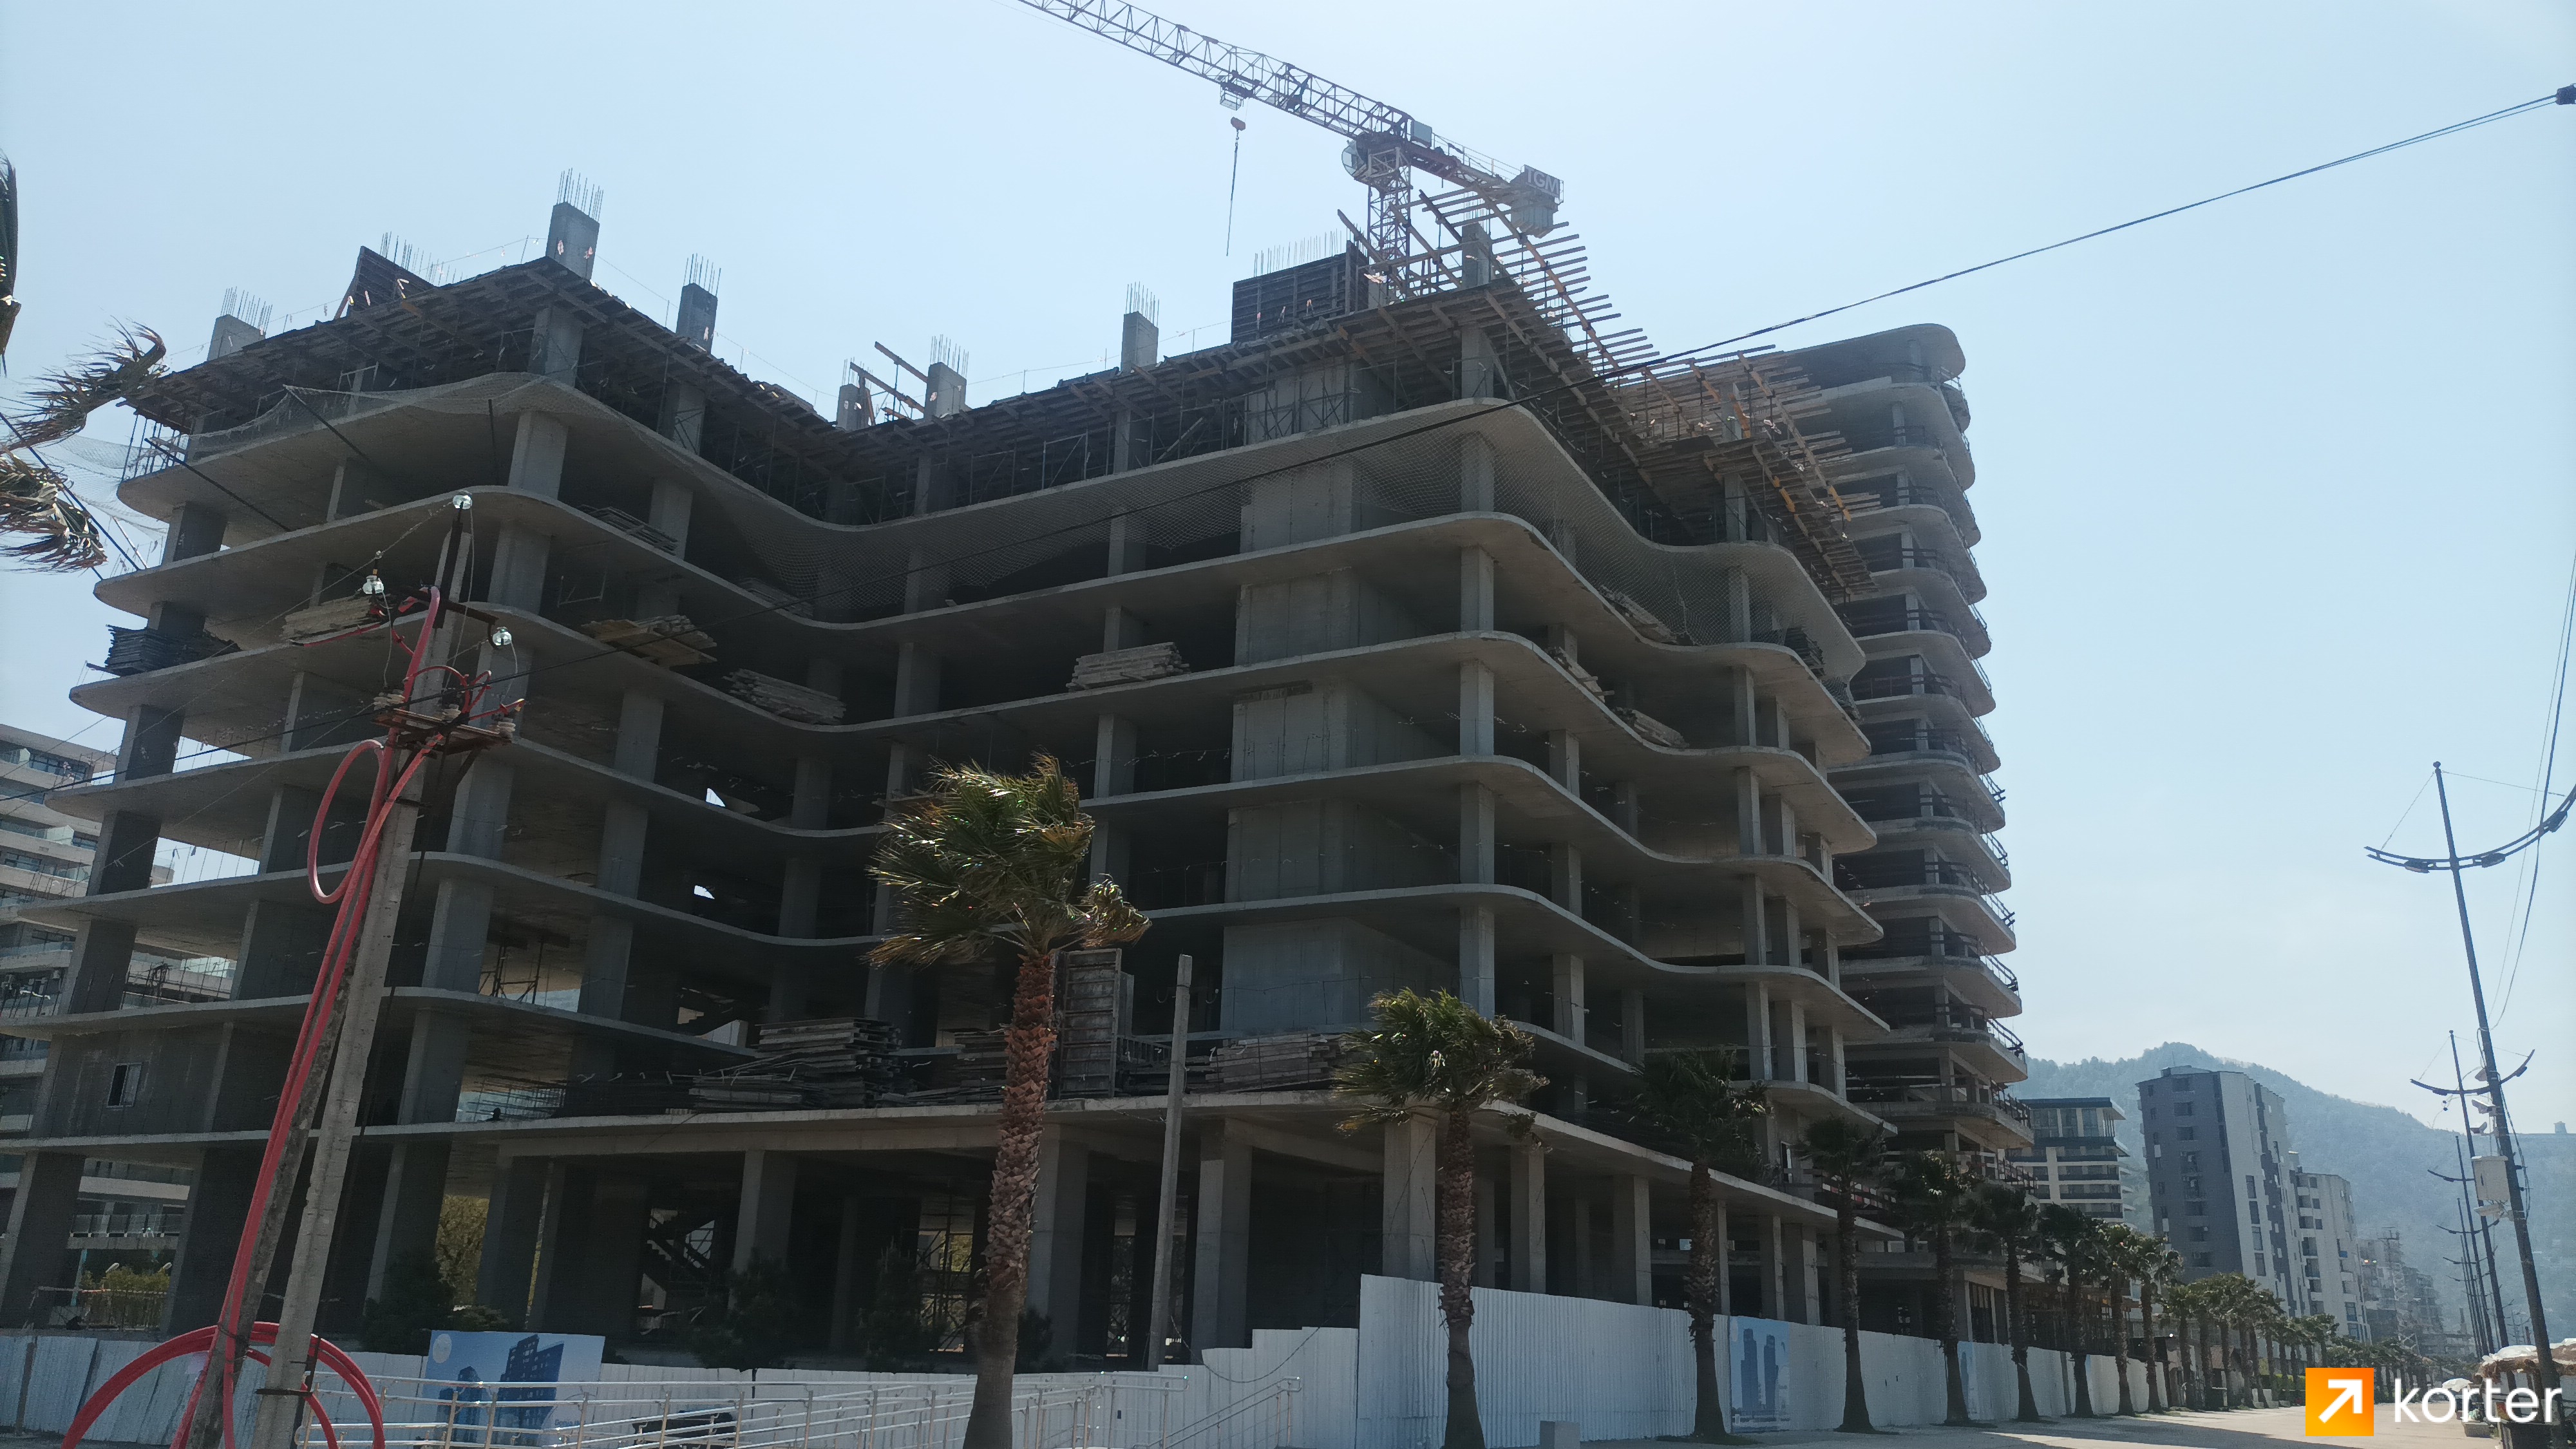 Construction progress Mgzavrebi Seaside - Angle 20, April 2022